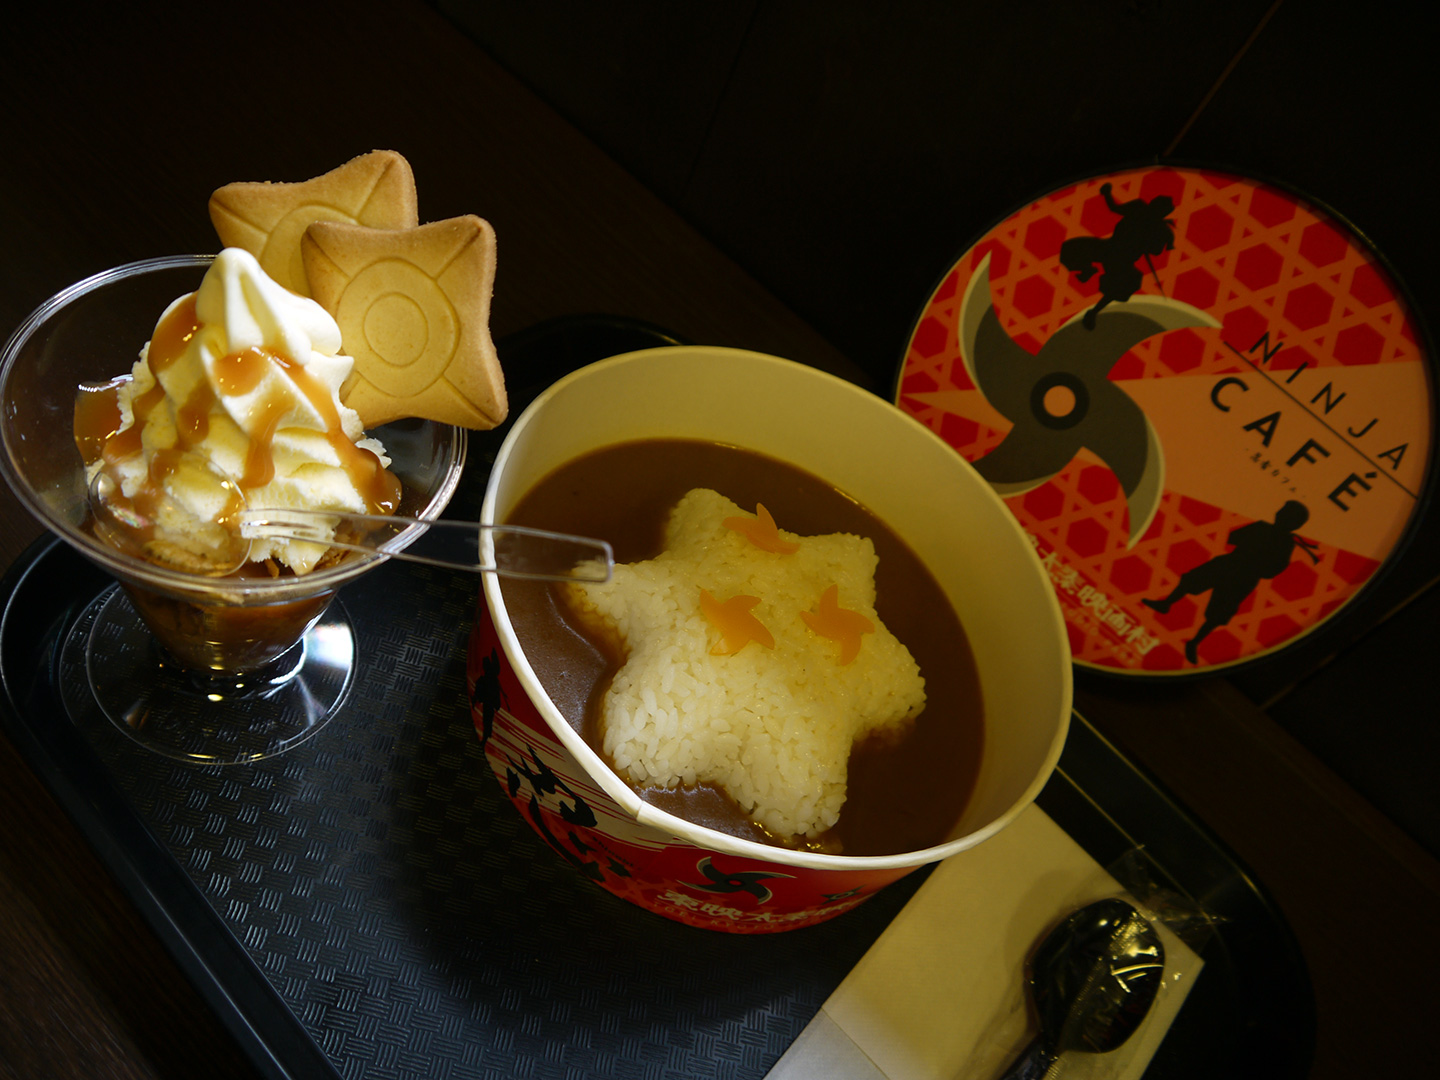 star shaped curry and ice cream sundae